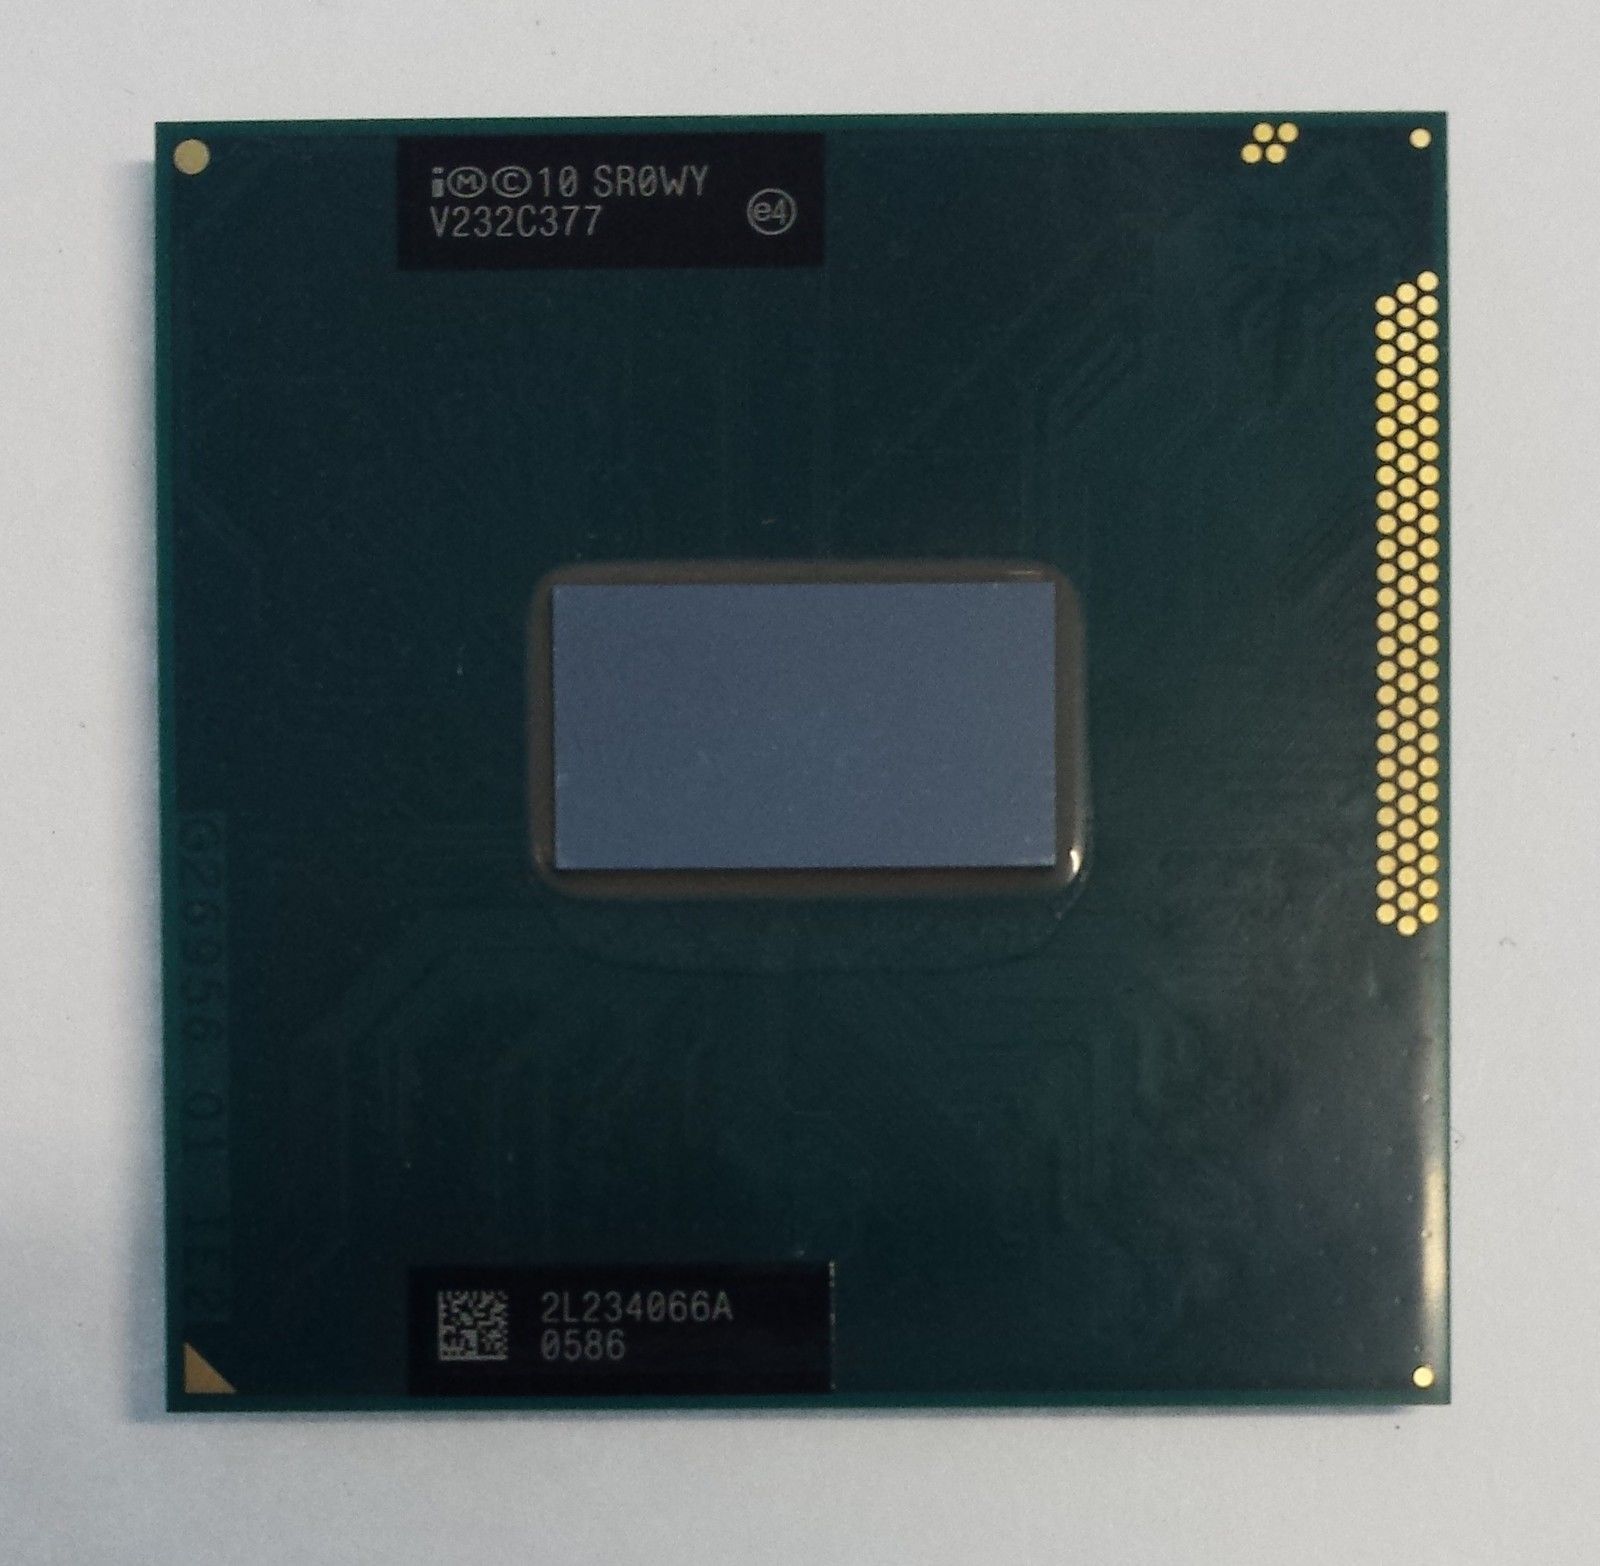 Intel Core i5-3230M 3rd Gen 2.60GHz Laptop CPU Socket G2 SR0WY Processor